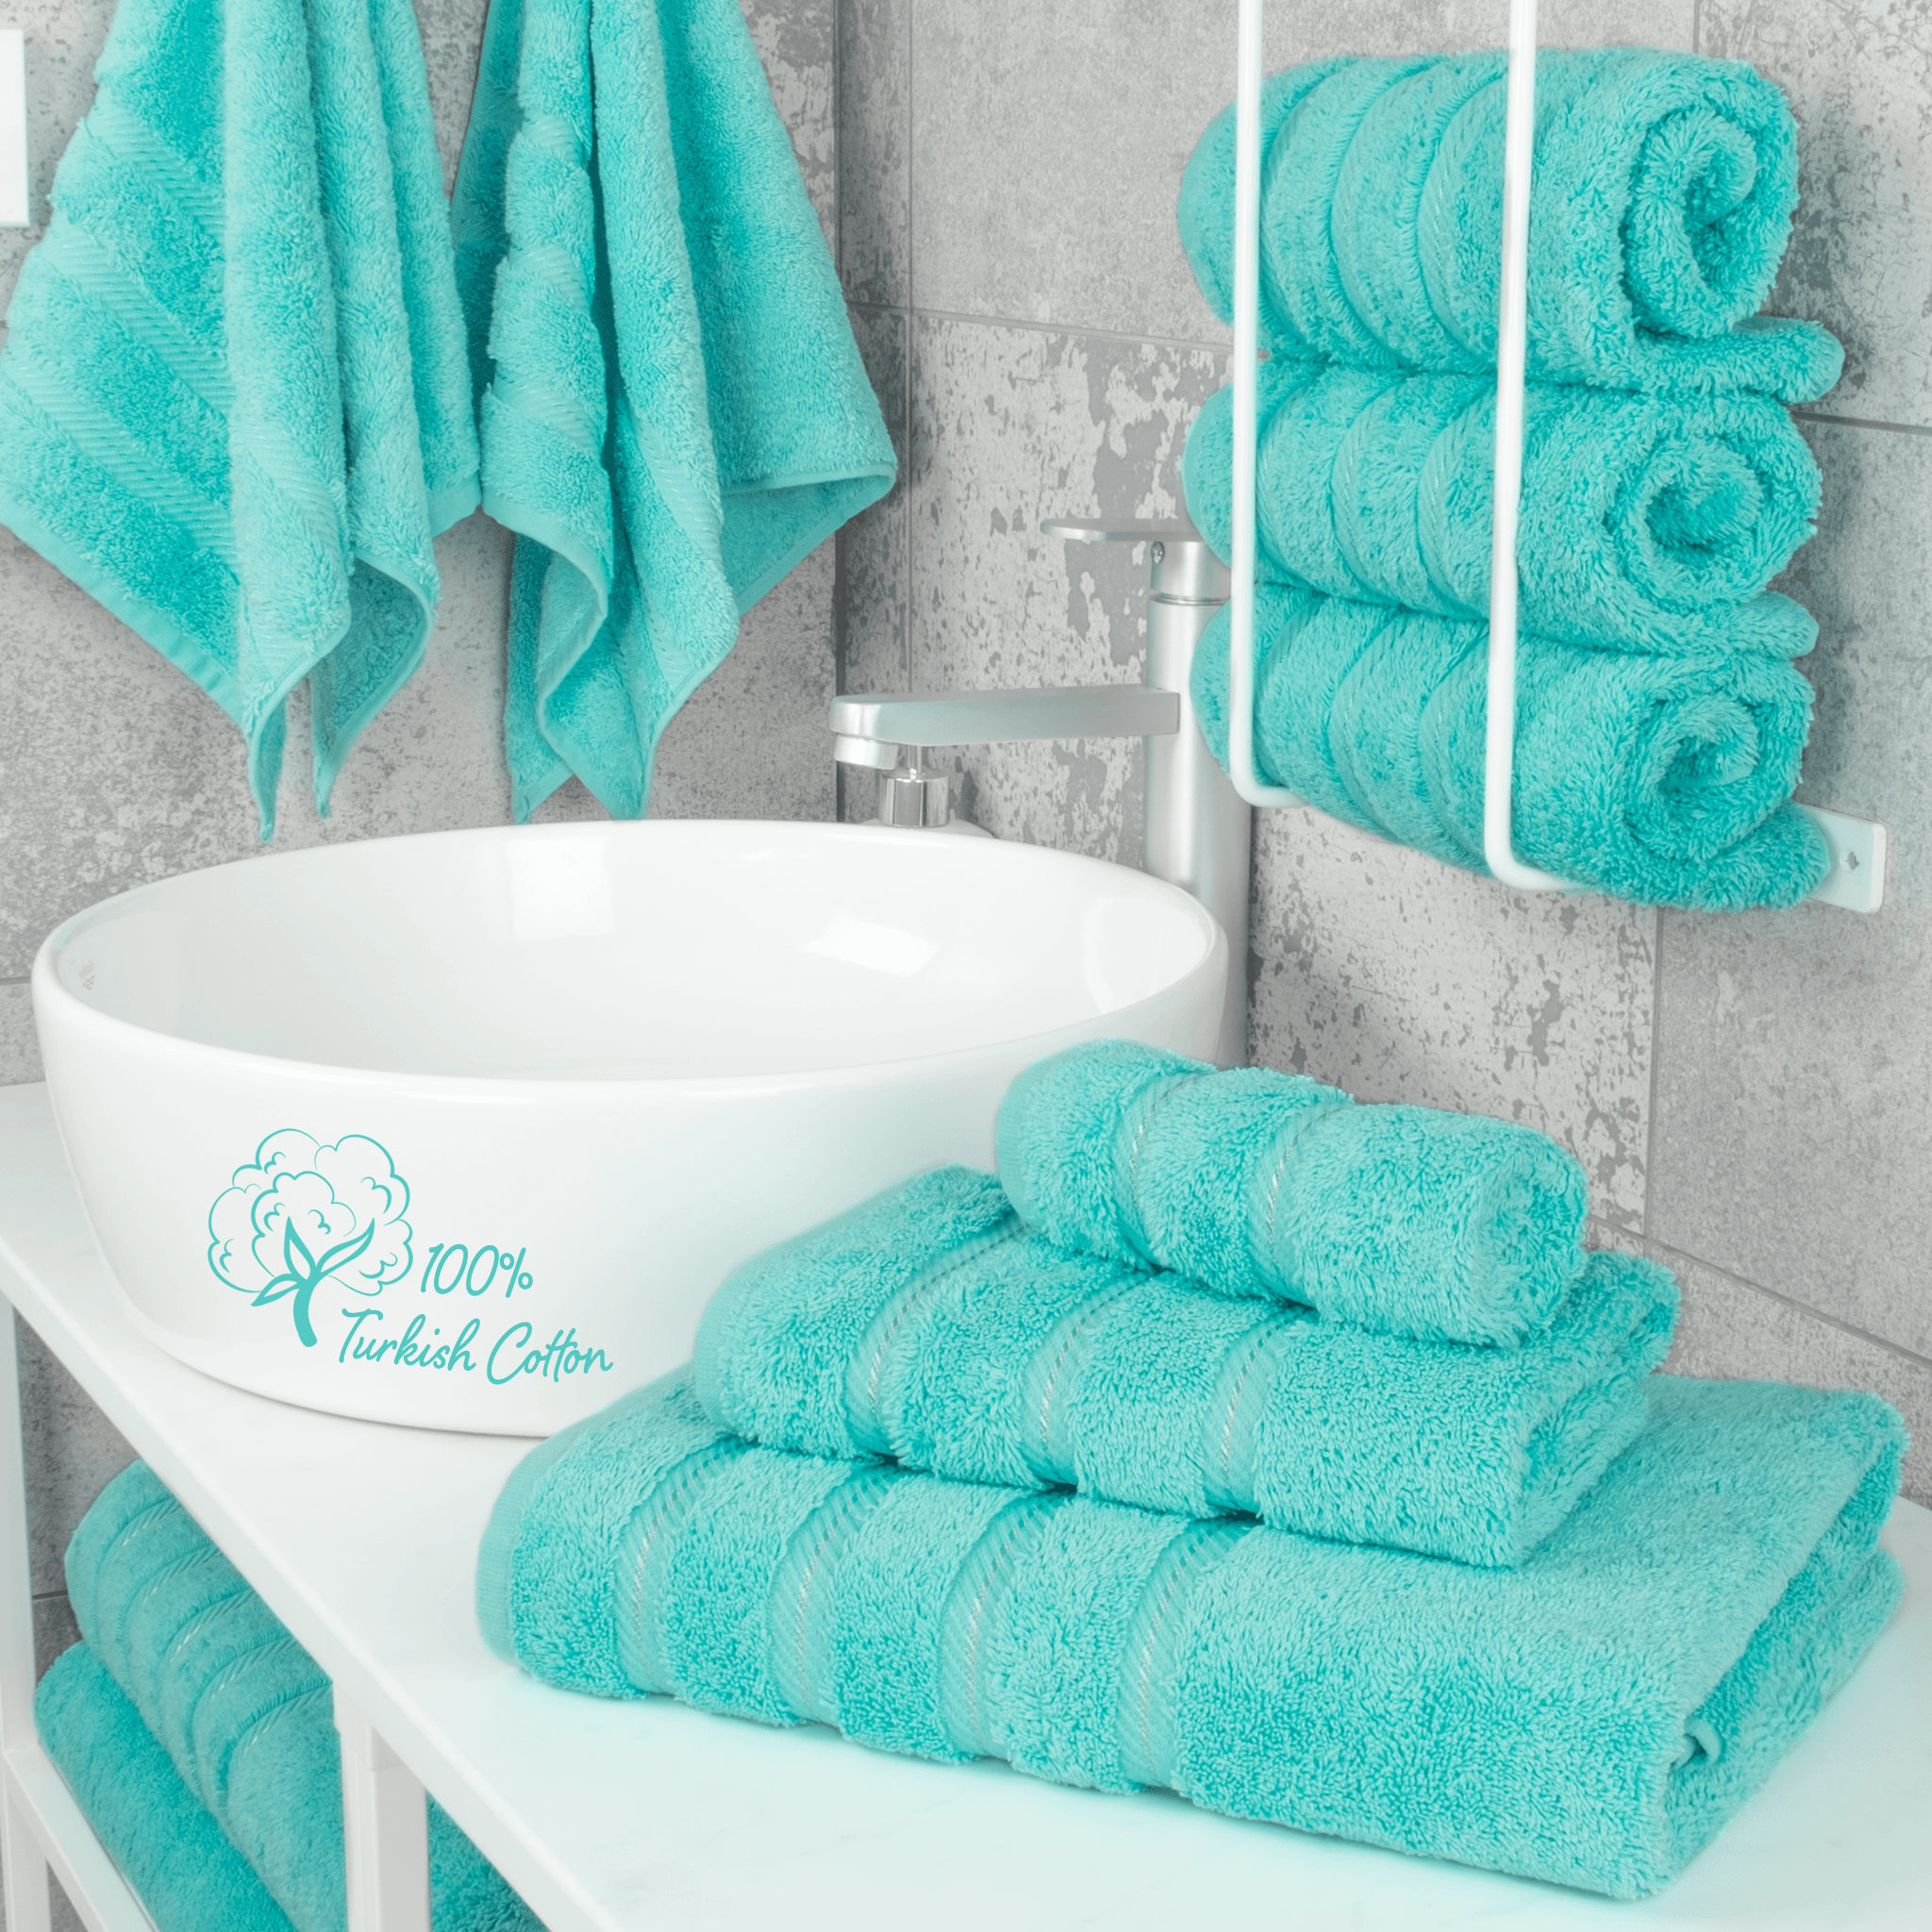 American Soft Linen - 3 Piece Turkish Cotton Towel Set - Turquoise-Blue - 2